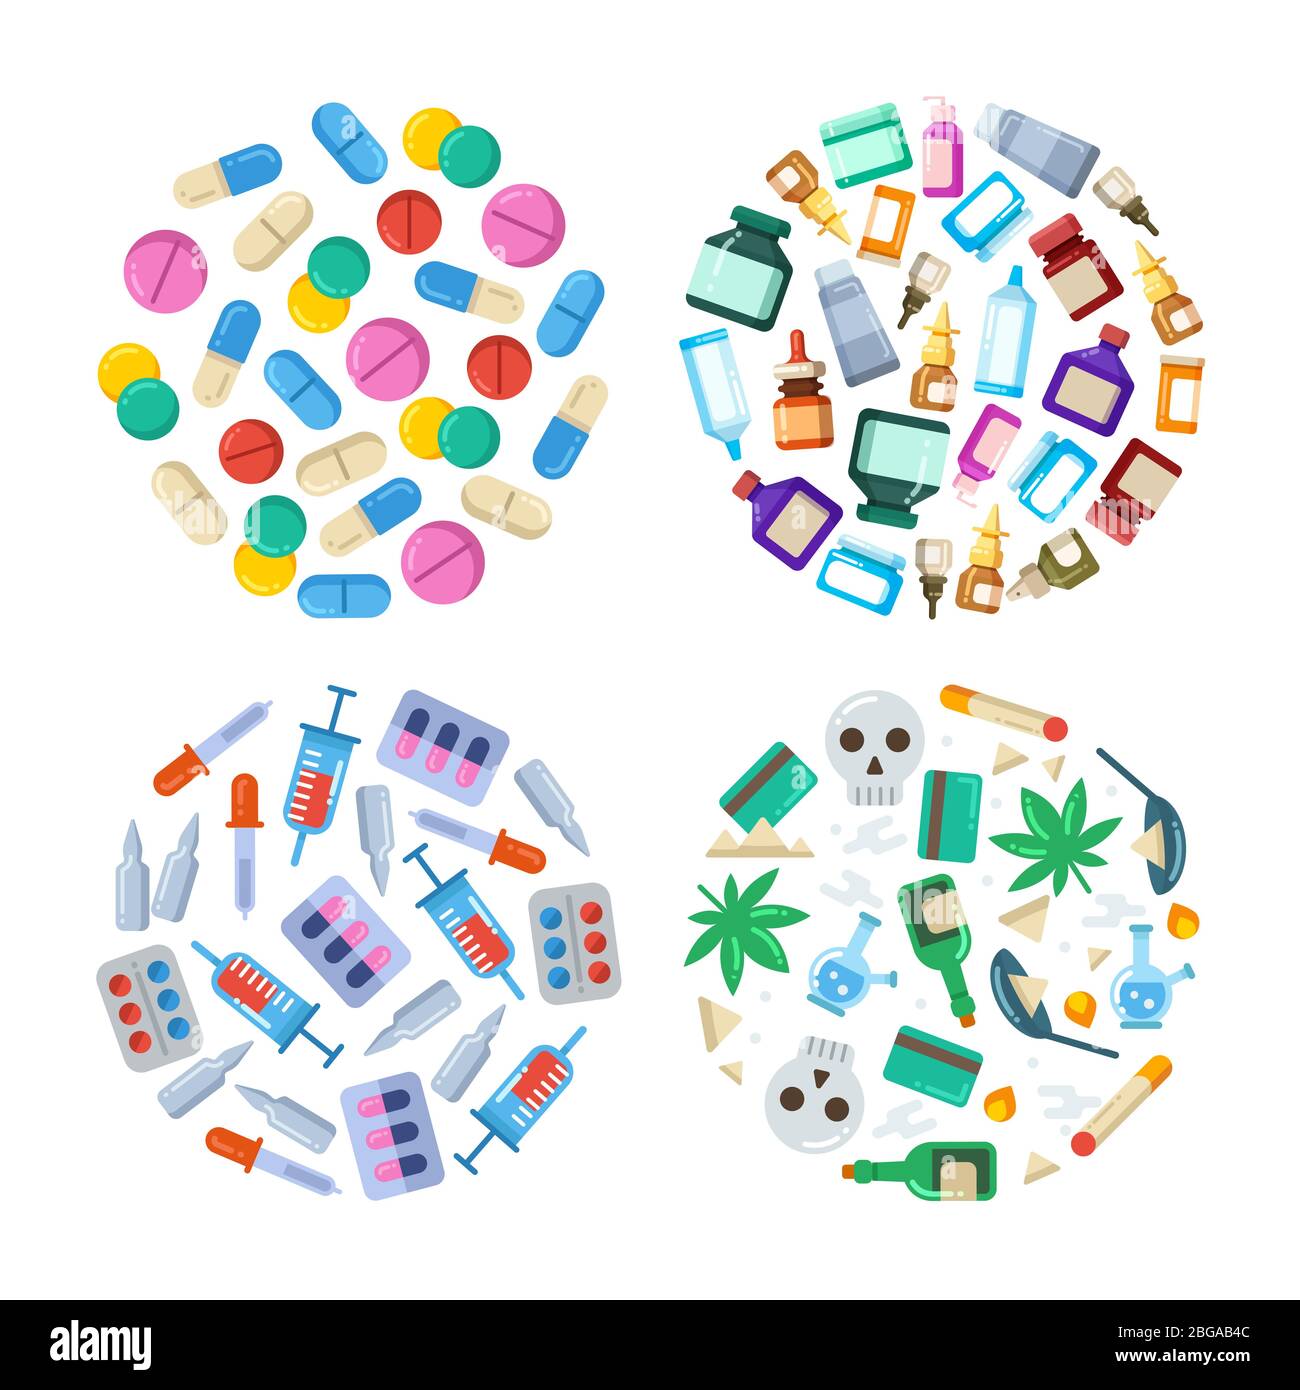 Medizin Cartoon Pille, Medikament, Tisch, Antibiotika, Medikamente Dosis flach runde Konzepte. Vektorgrafik Stock Vektor